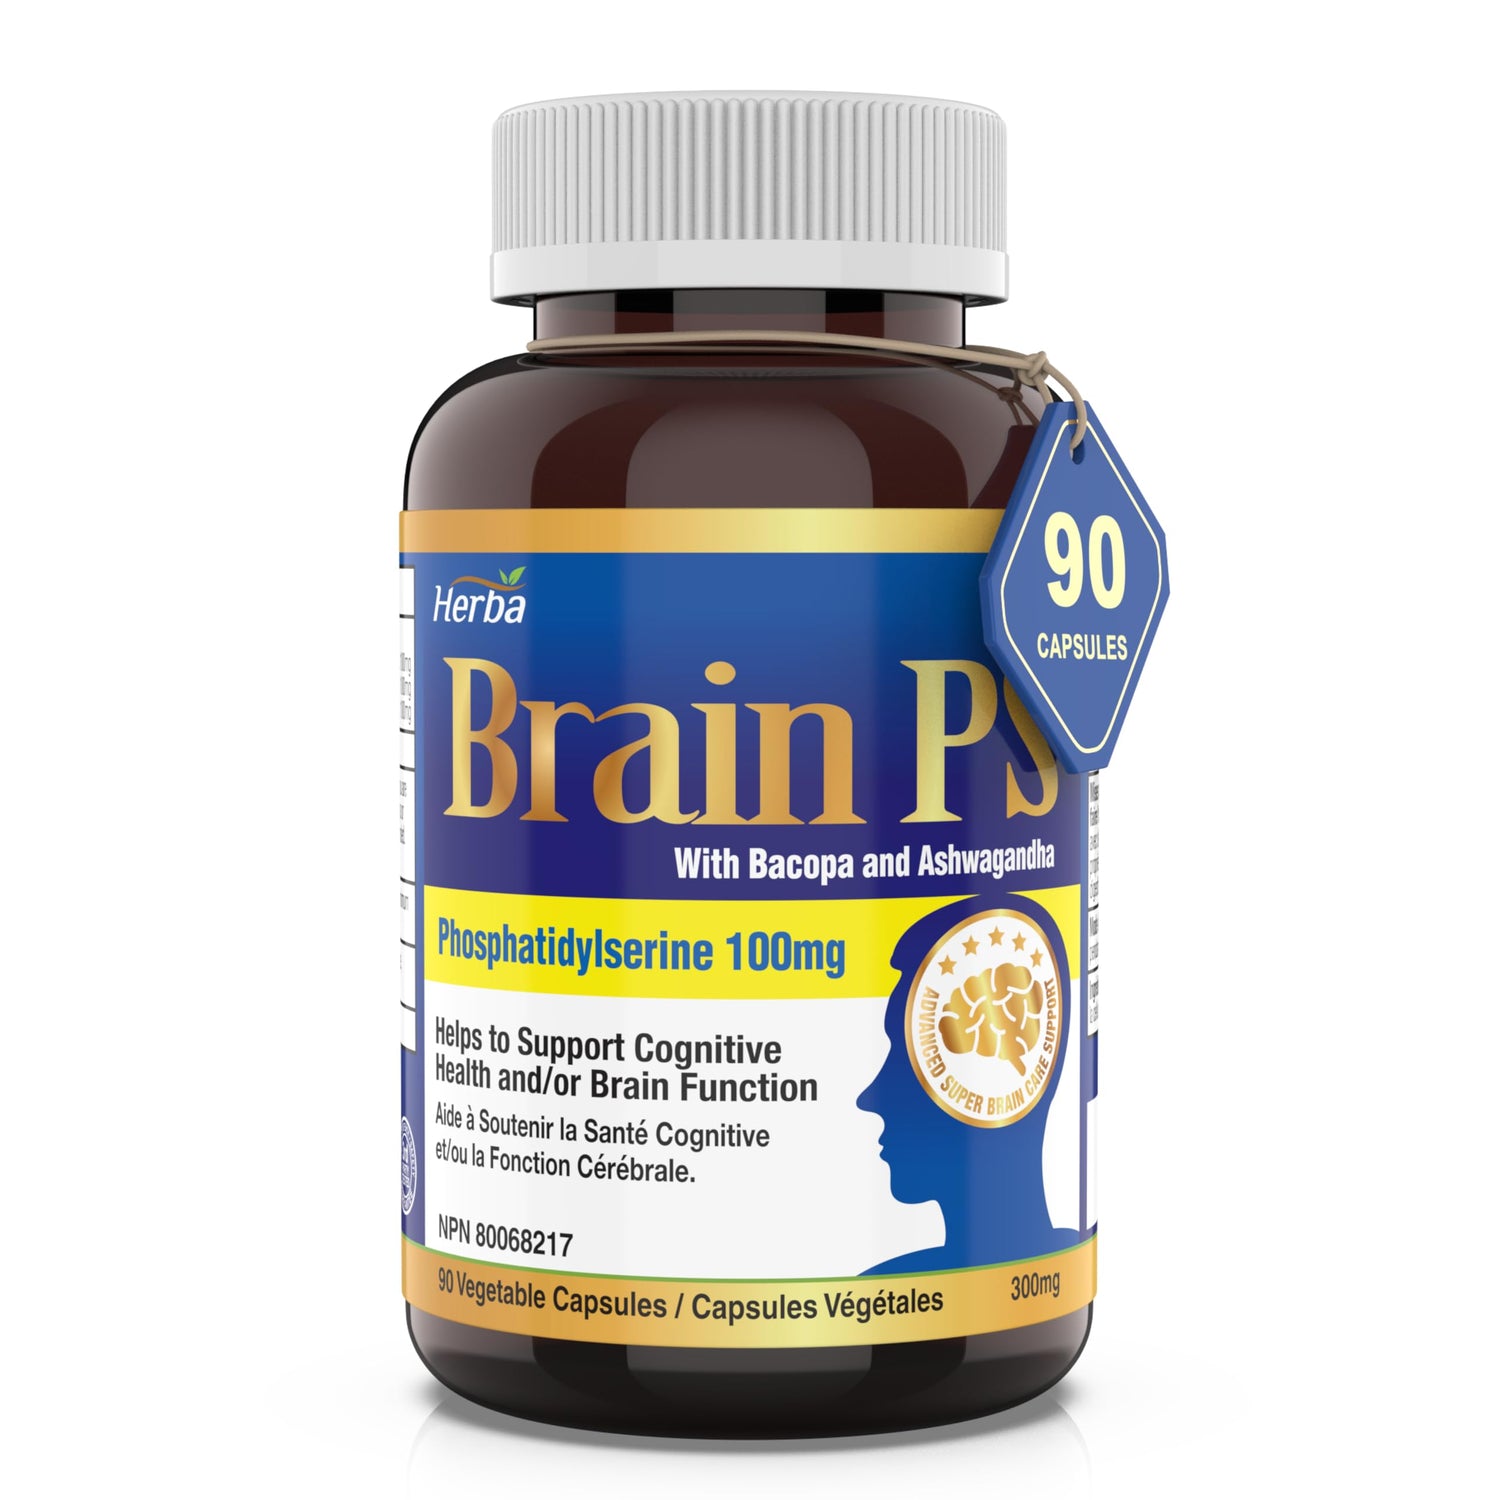 Herba Brain PS - 90 Capsules | Brain Supplement with Phosphatidylserine, Bacopa Monnieri, and Ashwagandha